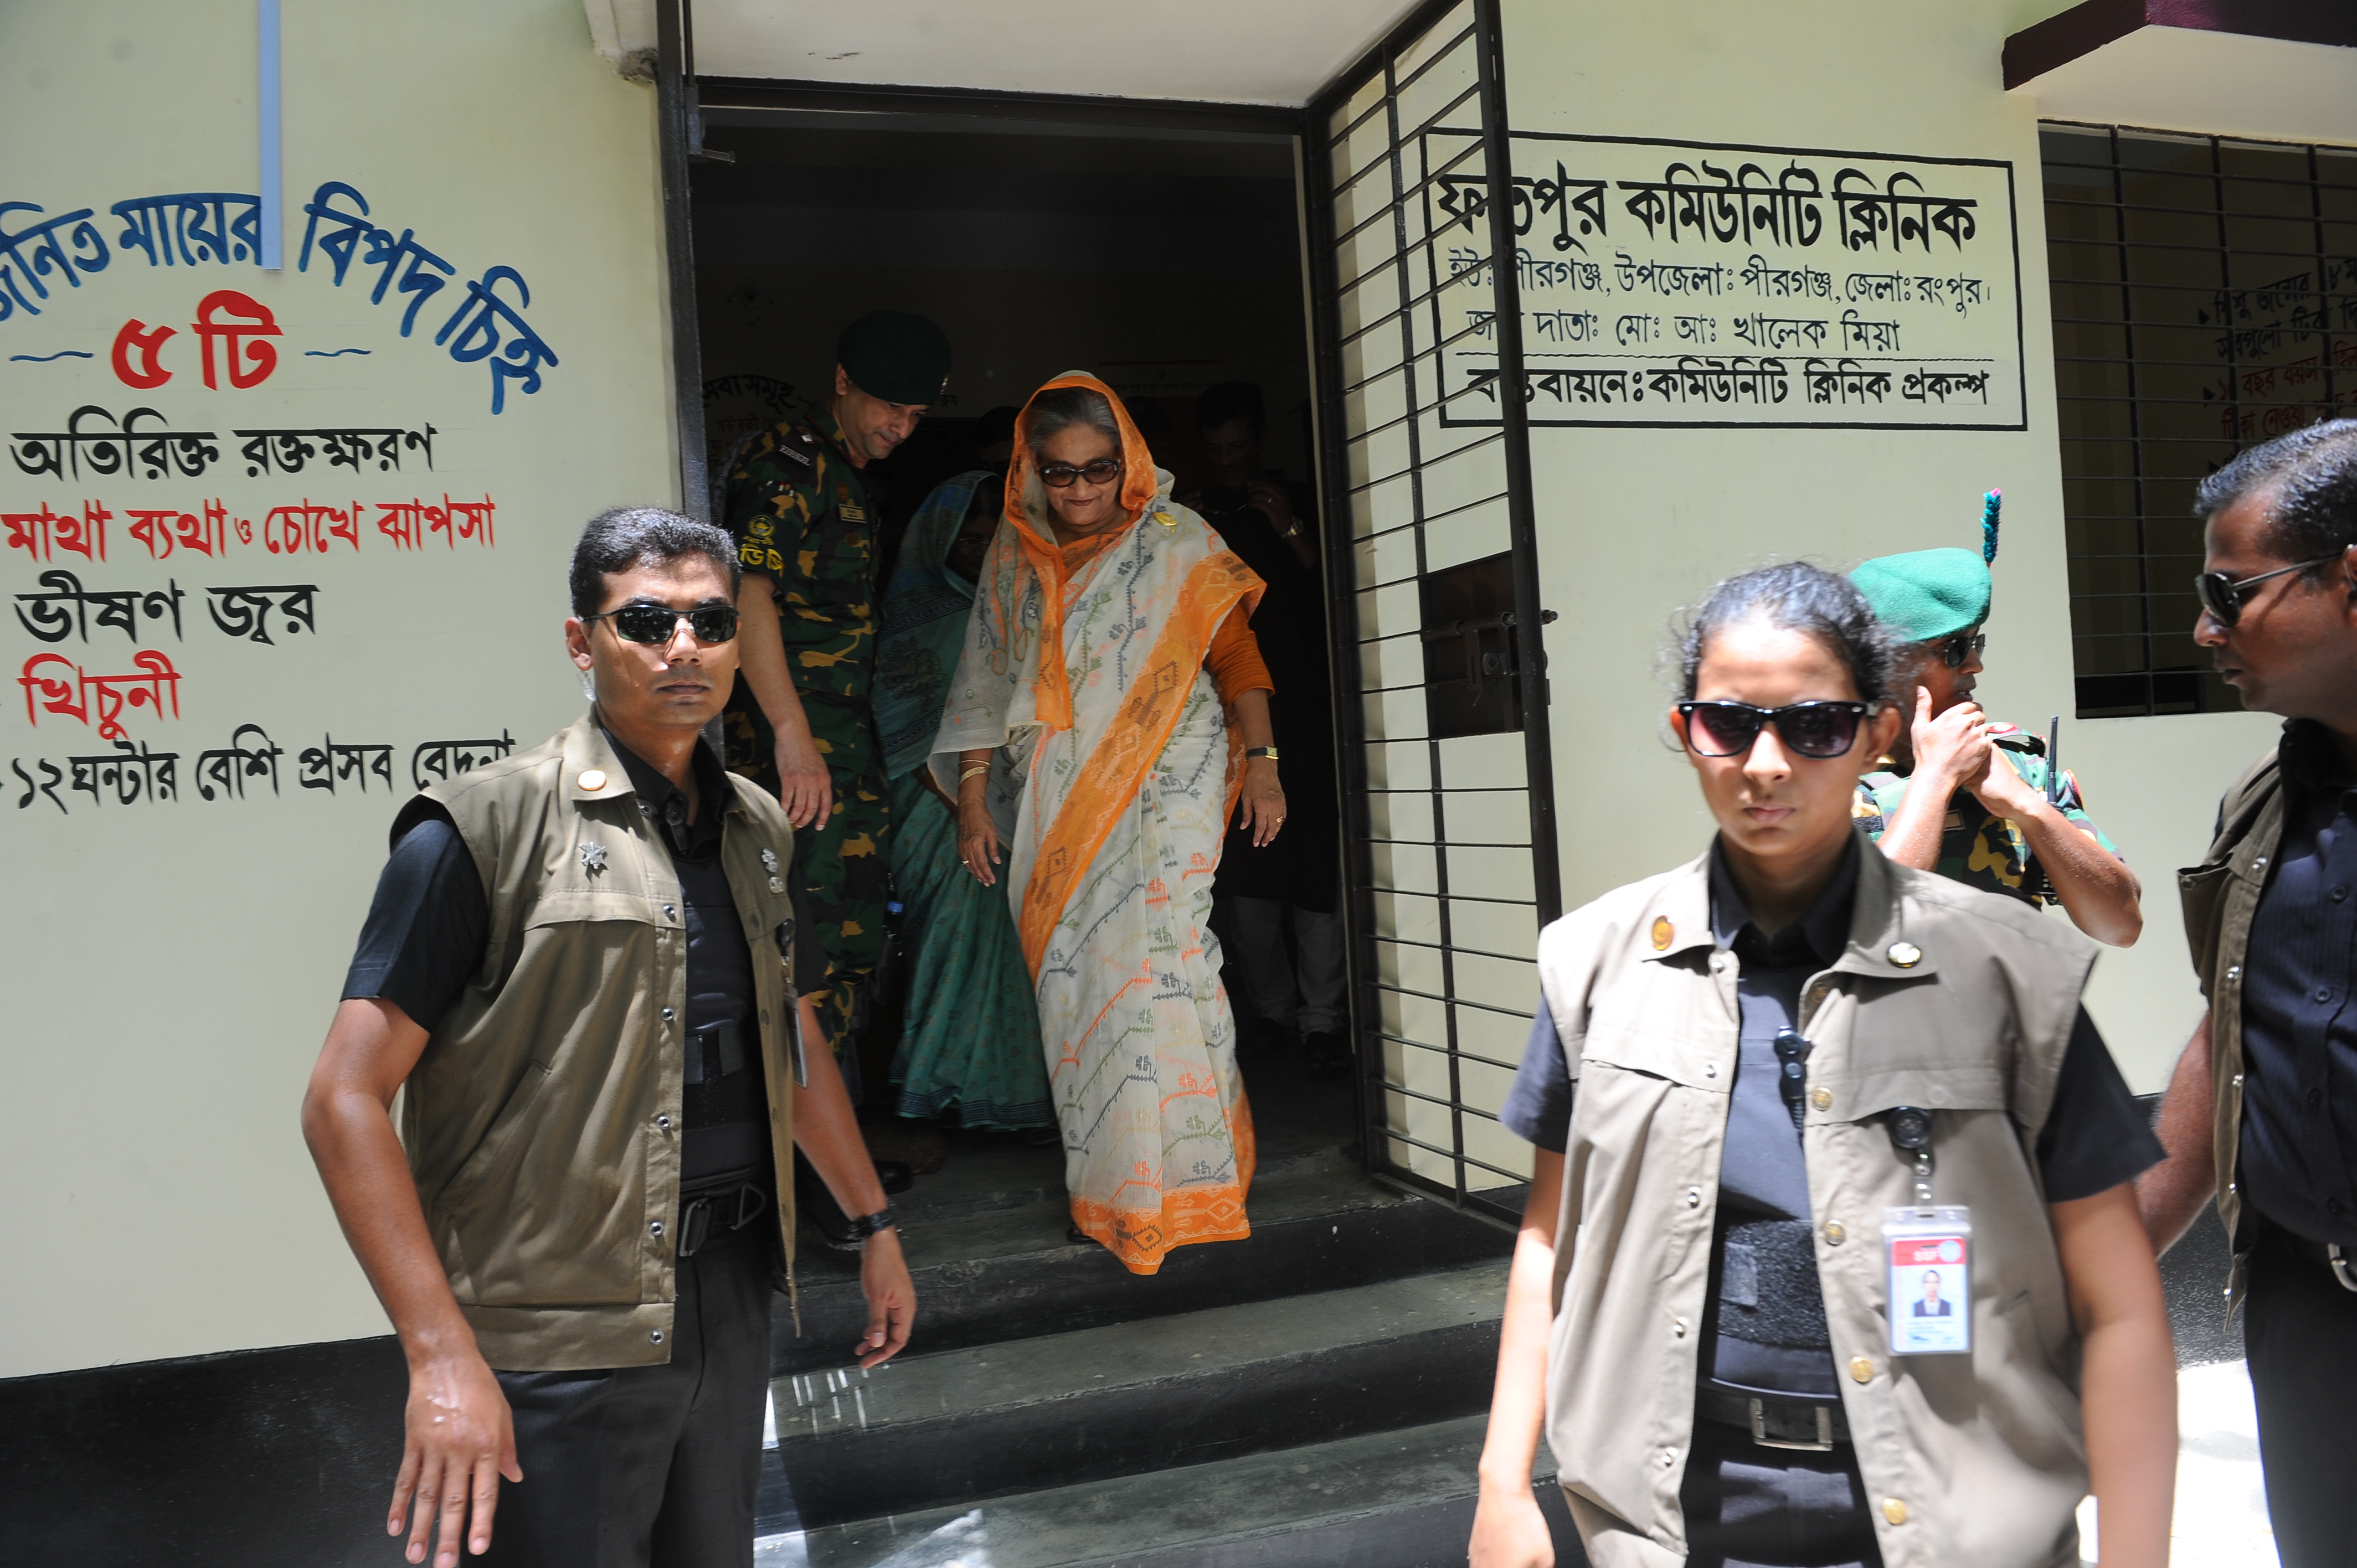 Community clinics model: UN adopts resolution highlighting Sheikh Hasina initiative